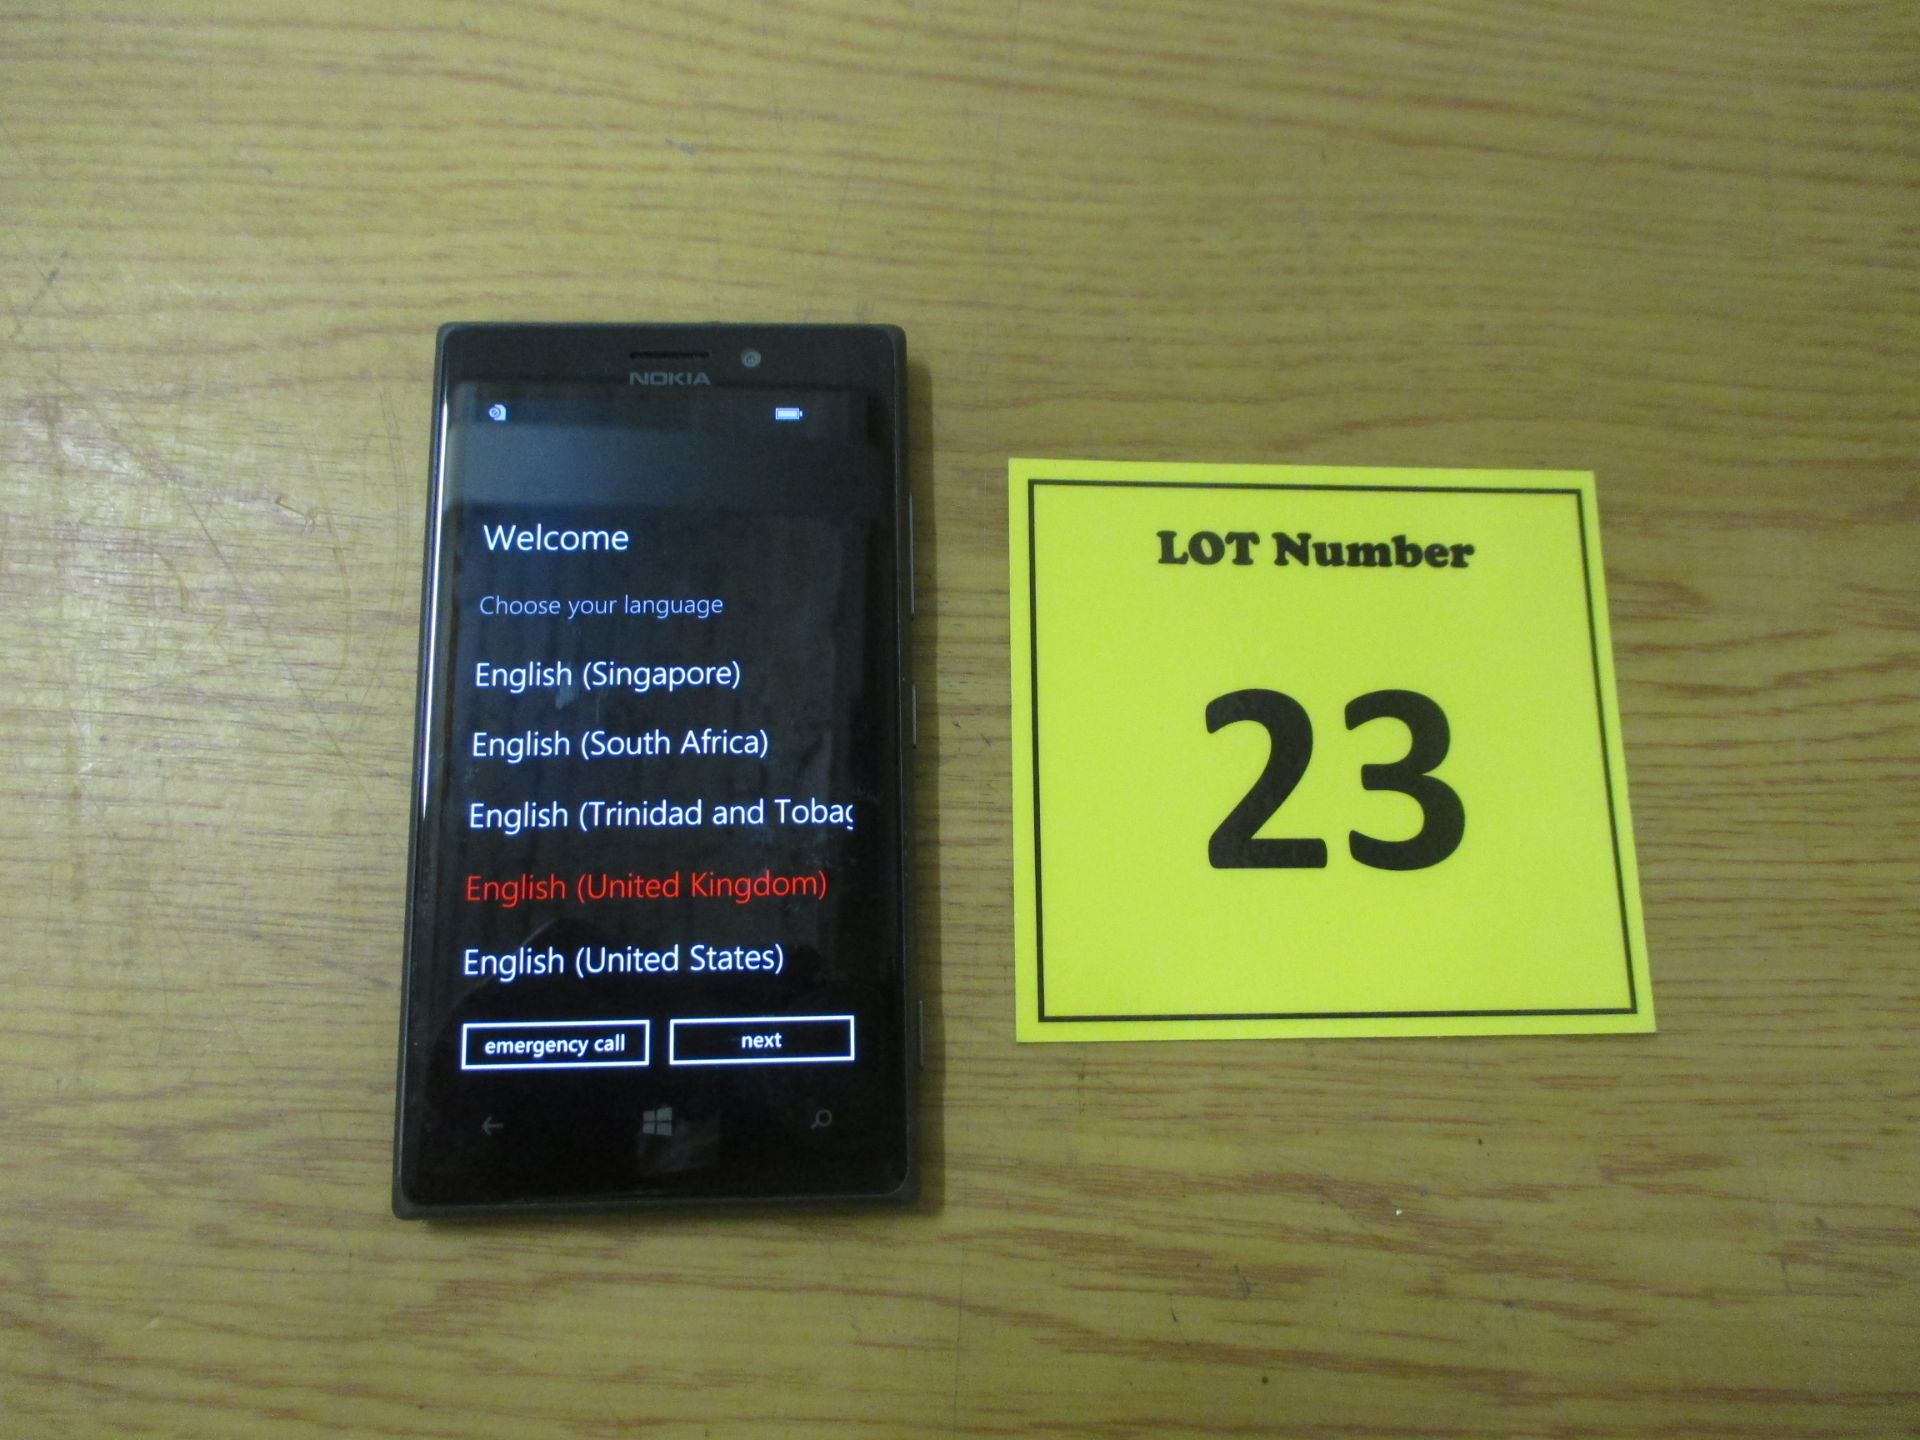 NOKIA LUMIA 925.4 32GB MOBILE SMARTPHONE